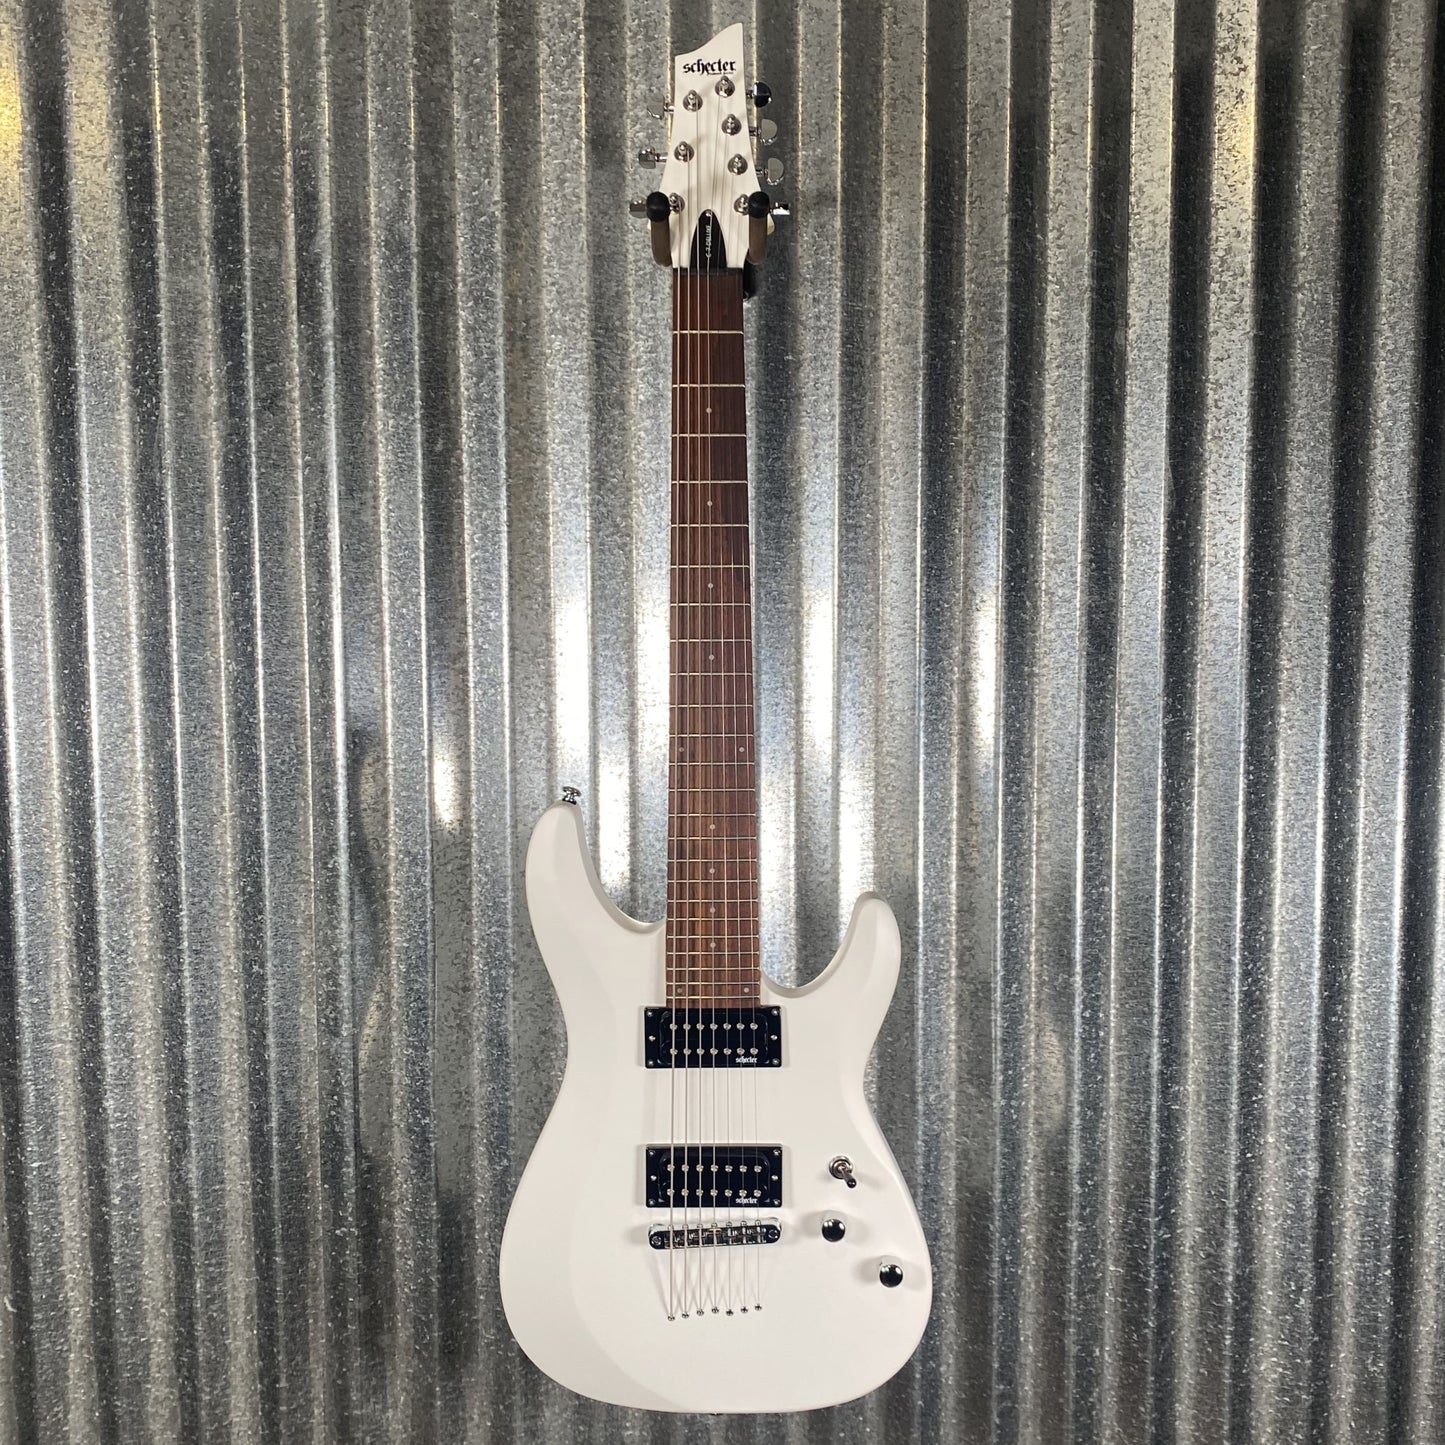 Schecter C-7 Deluxe 7 String Satin White Guitar #3174